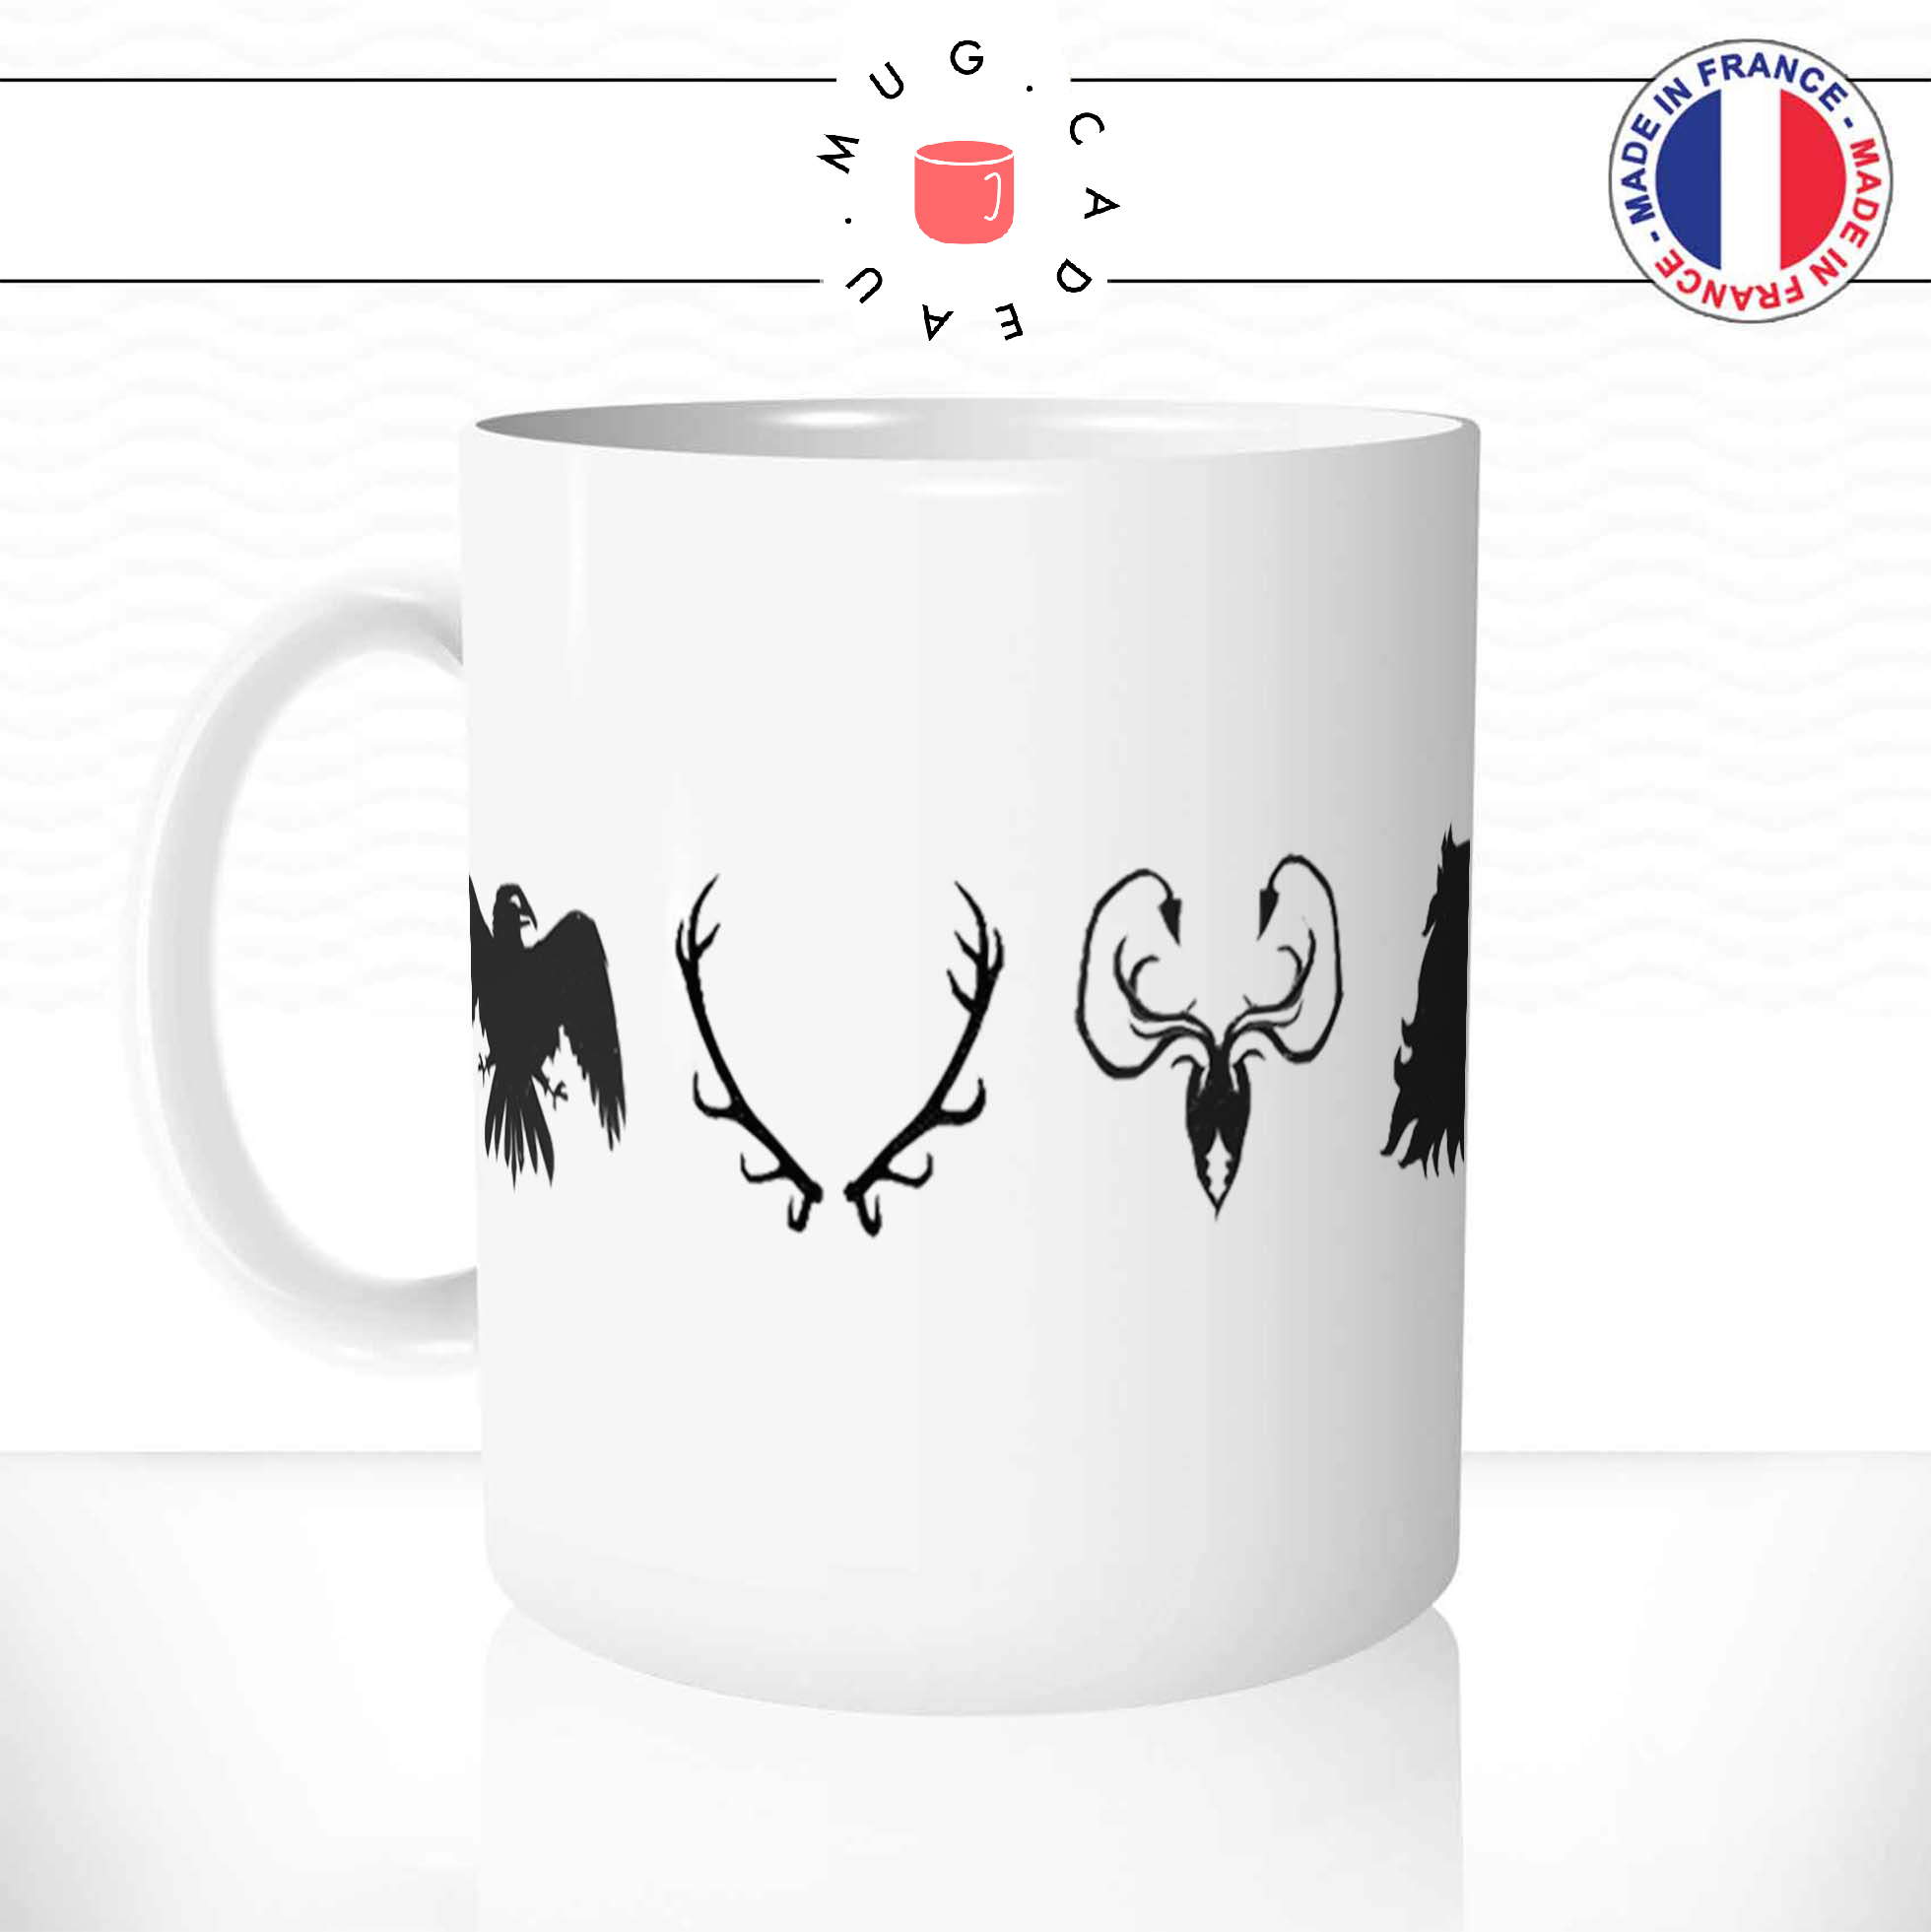 mug-tasse-ref4-film-serie-game-of-thrones-got-logos-noir-blanc-royaumes-familles-cafe-the-mugs-tasses-personnalise-anse-gauche